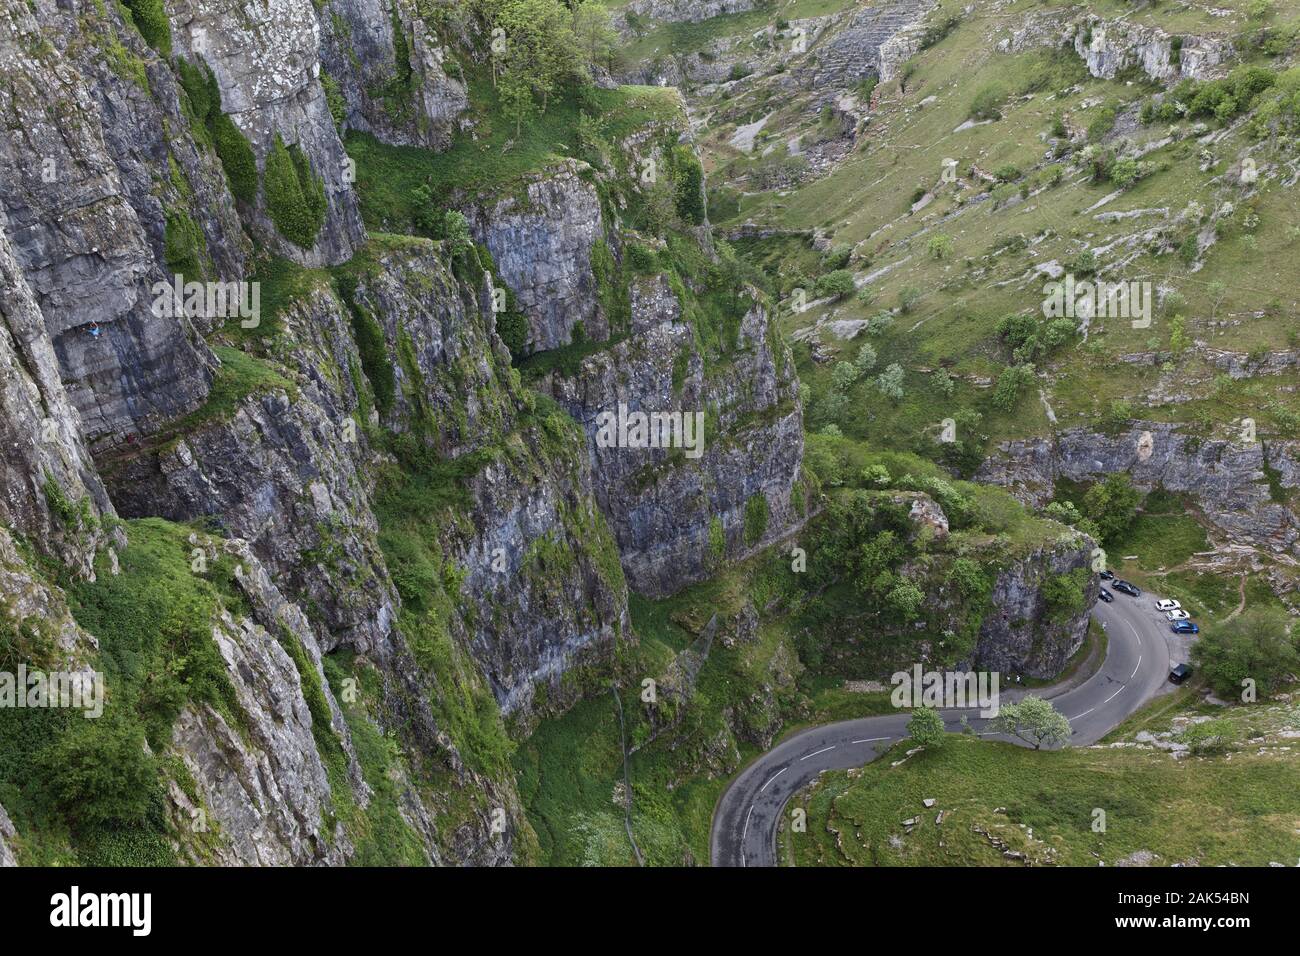 Cheddar: Felsschlucht Cheddar Gorge in den Mendip Hills, Suedengland | Utilizzo di tutto il mondo Foto Stock